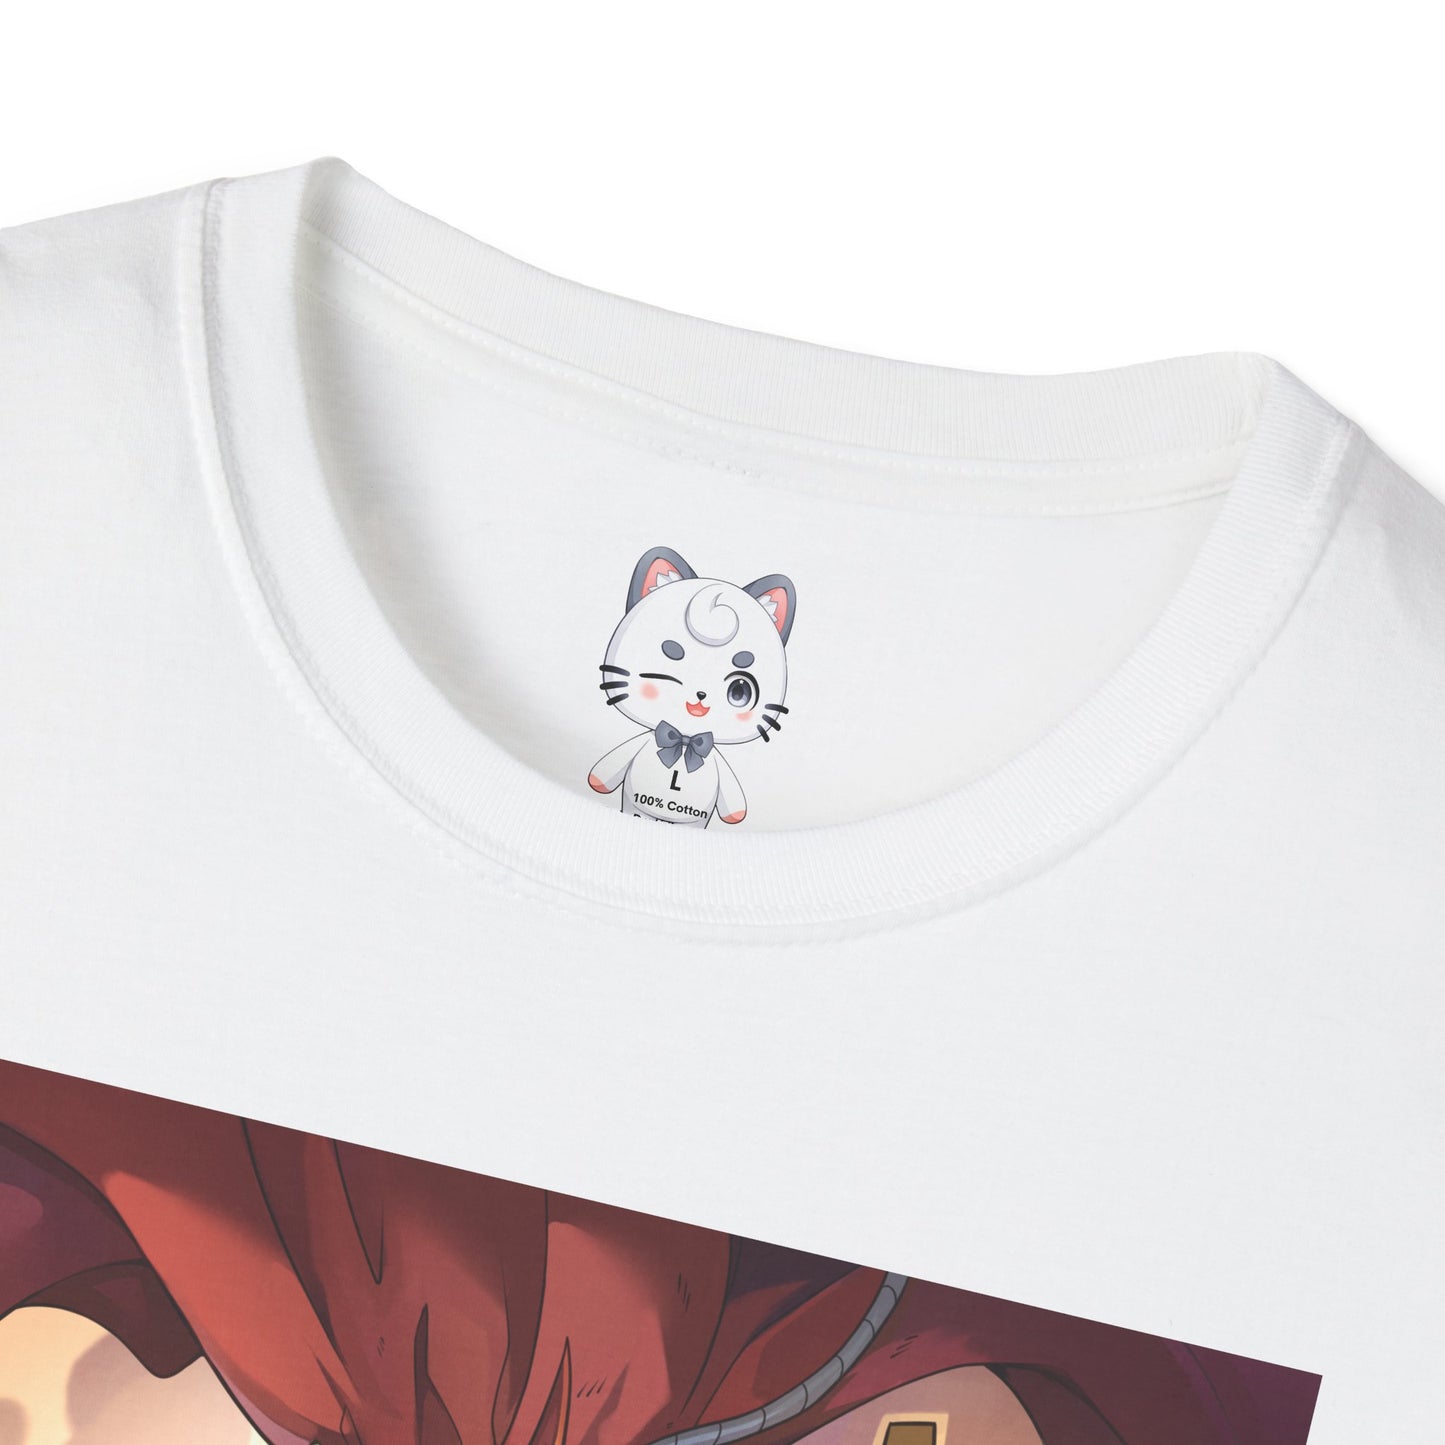 Digimon Dukemon T-Shirt Design by Currynoodleart